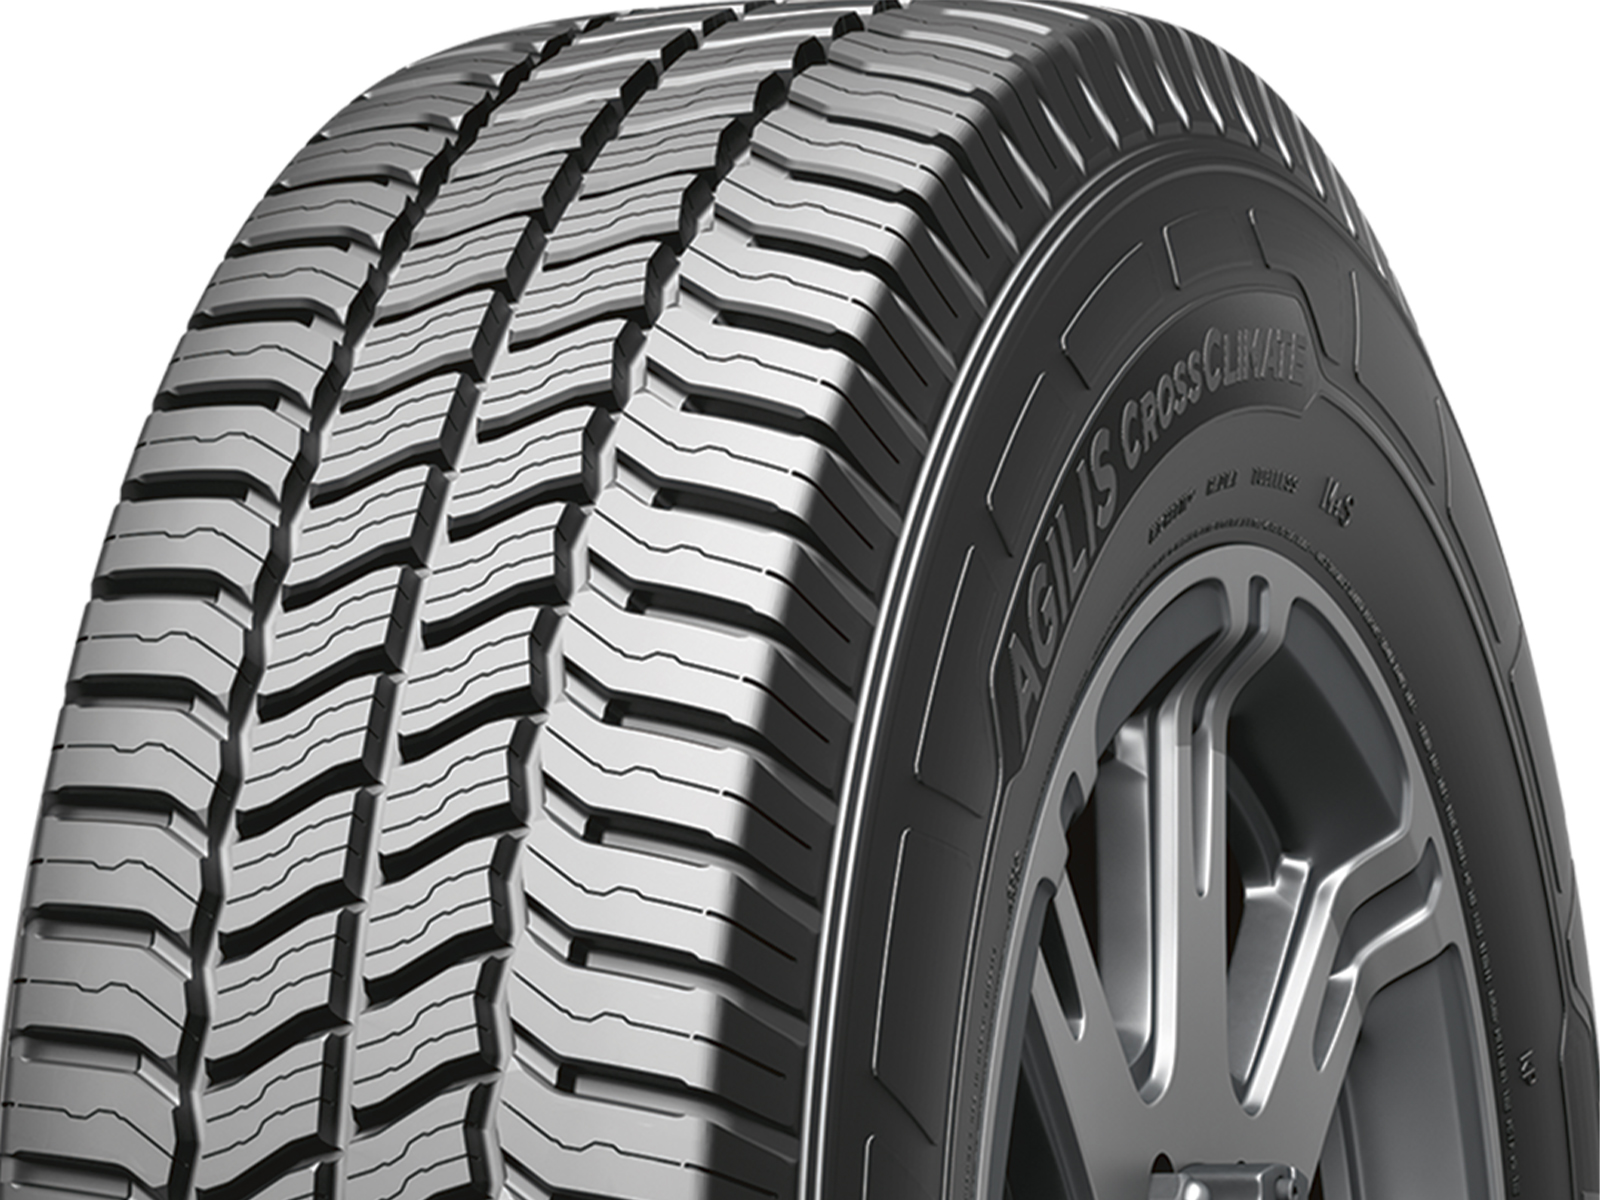 Michelin Agilis Cross Ridge Rugged Tires | Climate